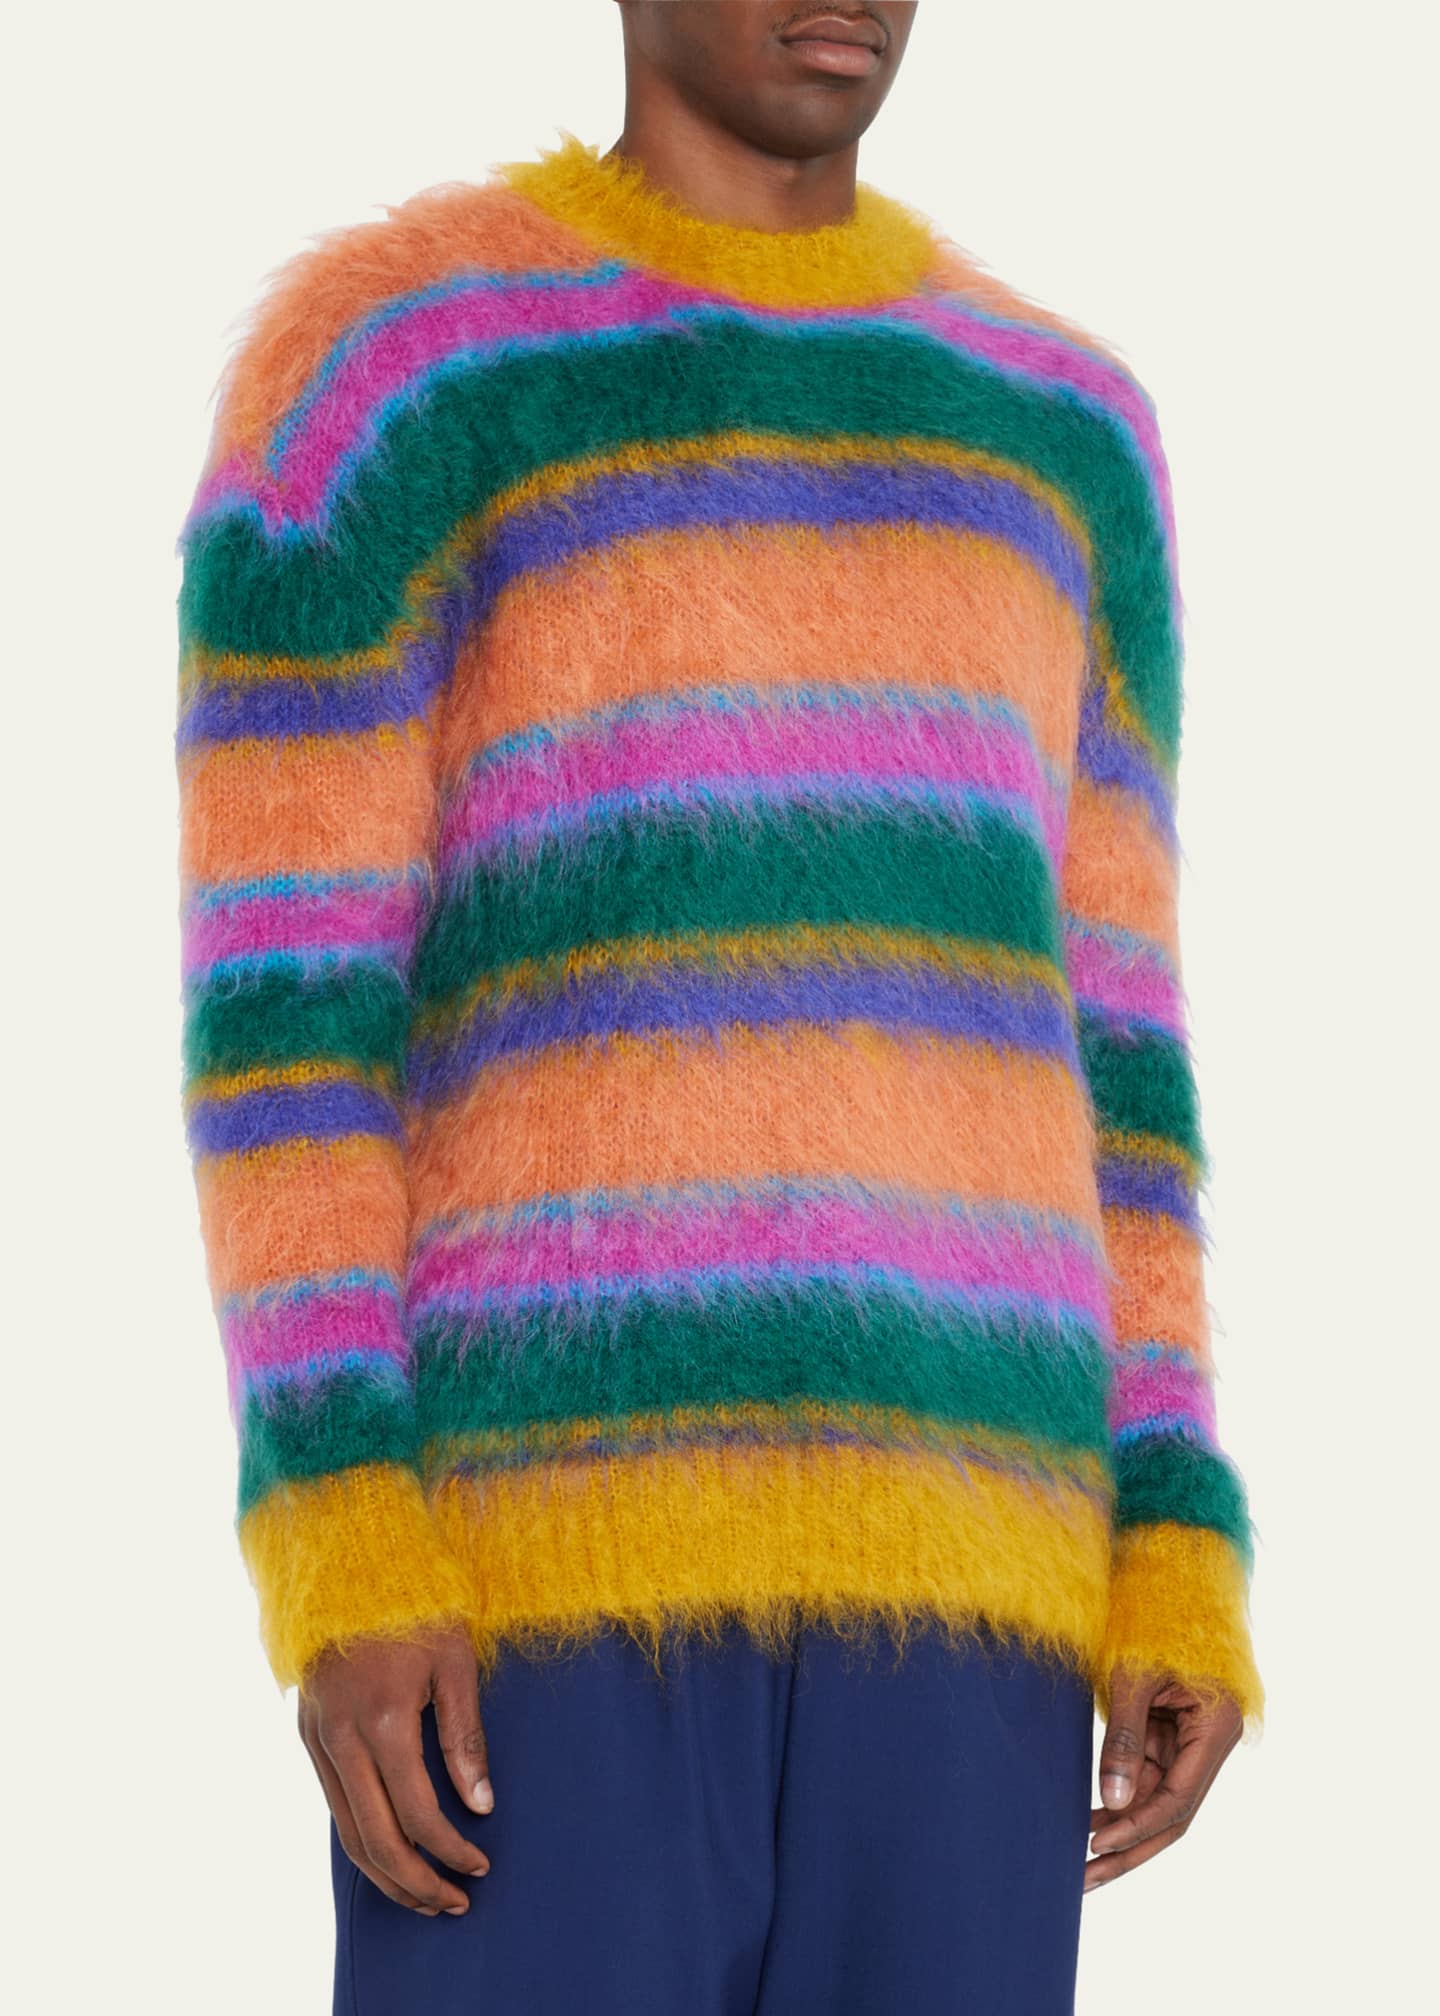 knit/mohair sweater i found : r/FashionReps